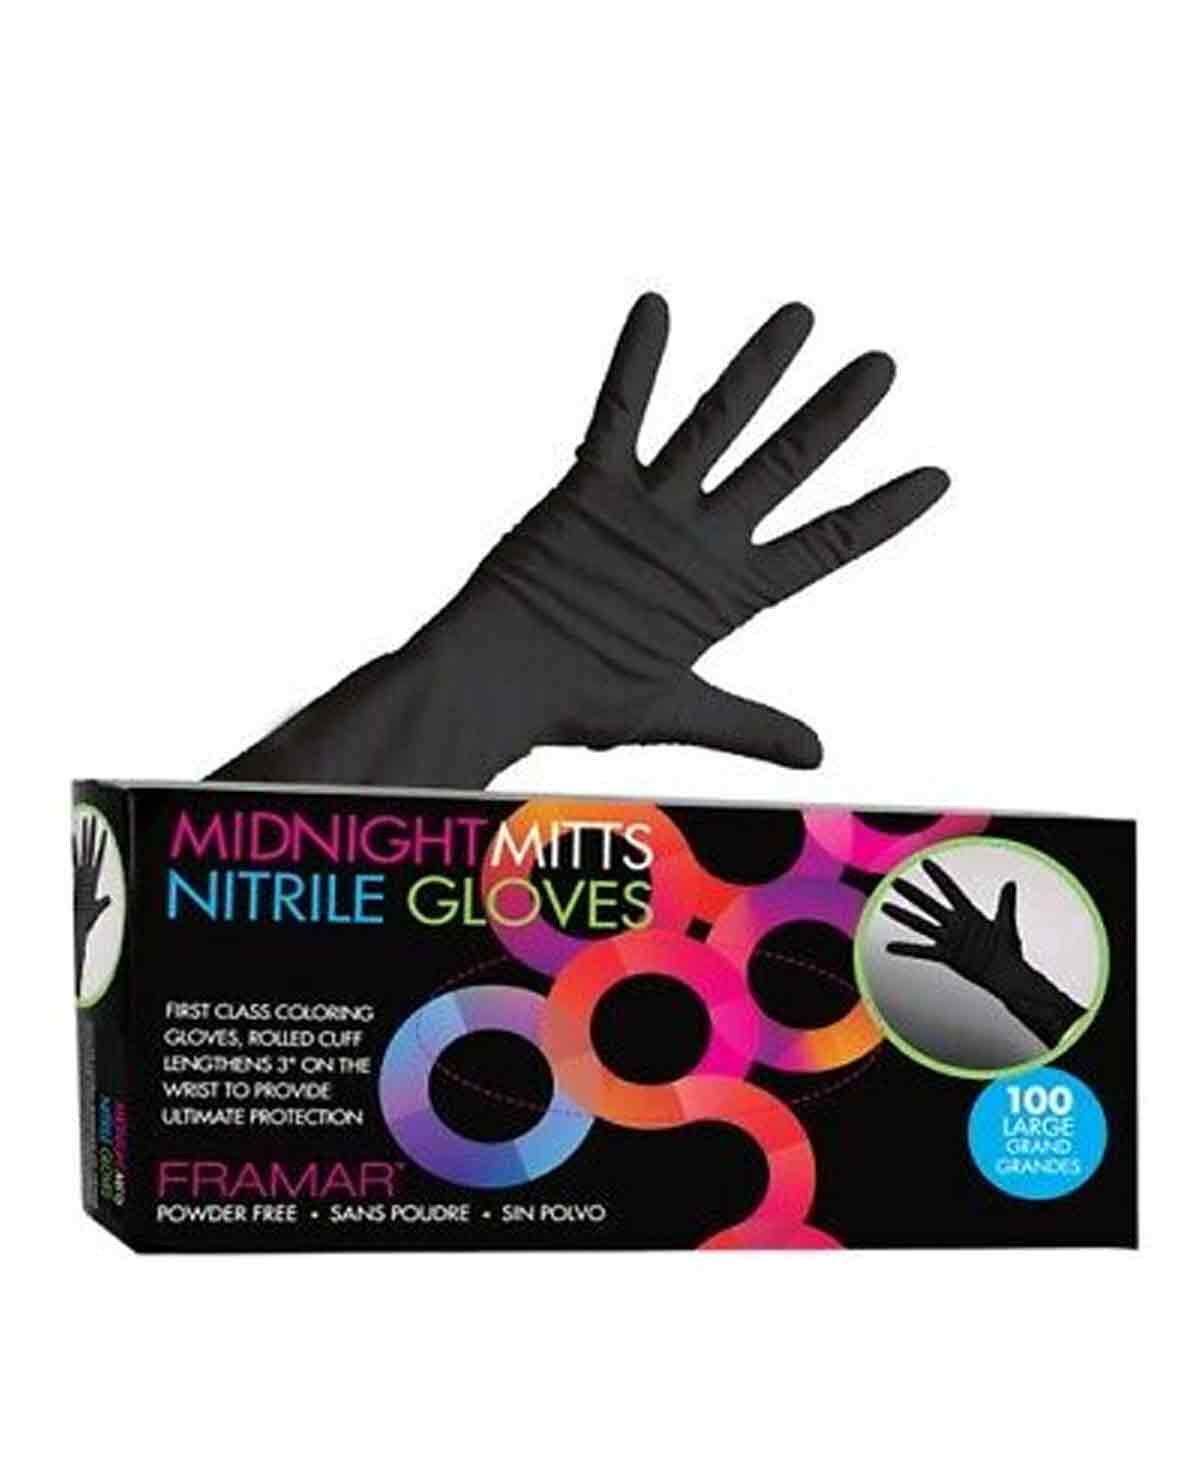 Framar Midnight Mitts Nitrile Gloves - Large